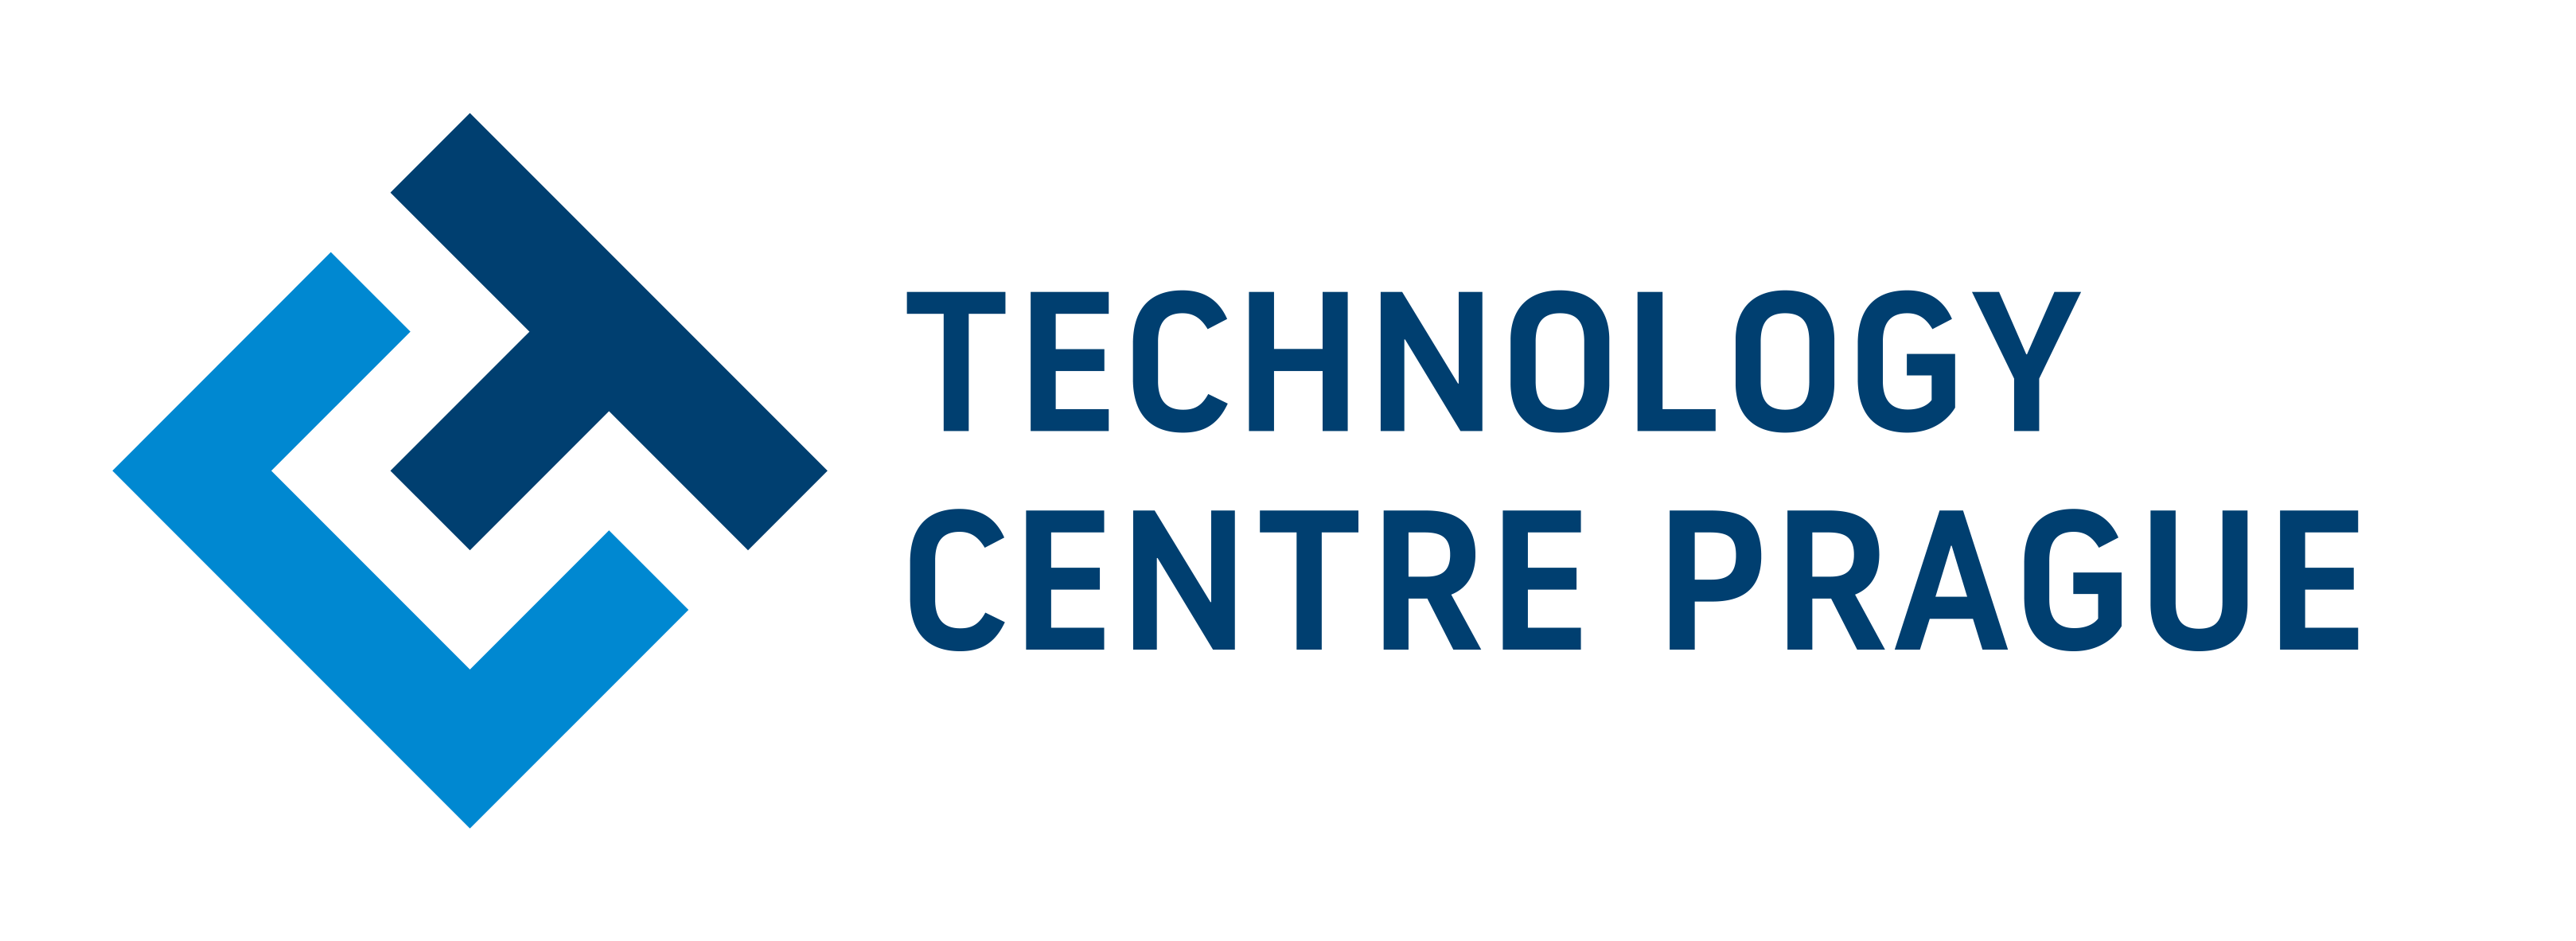 Technology Centre Prague (TC Prague)